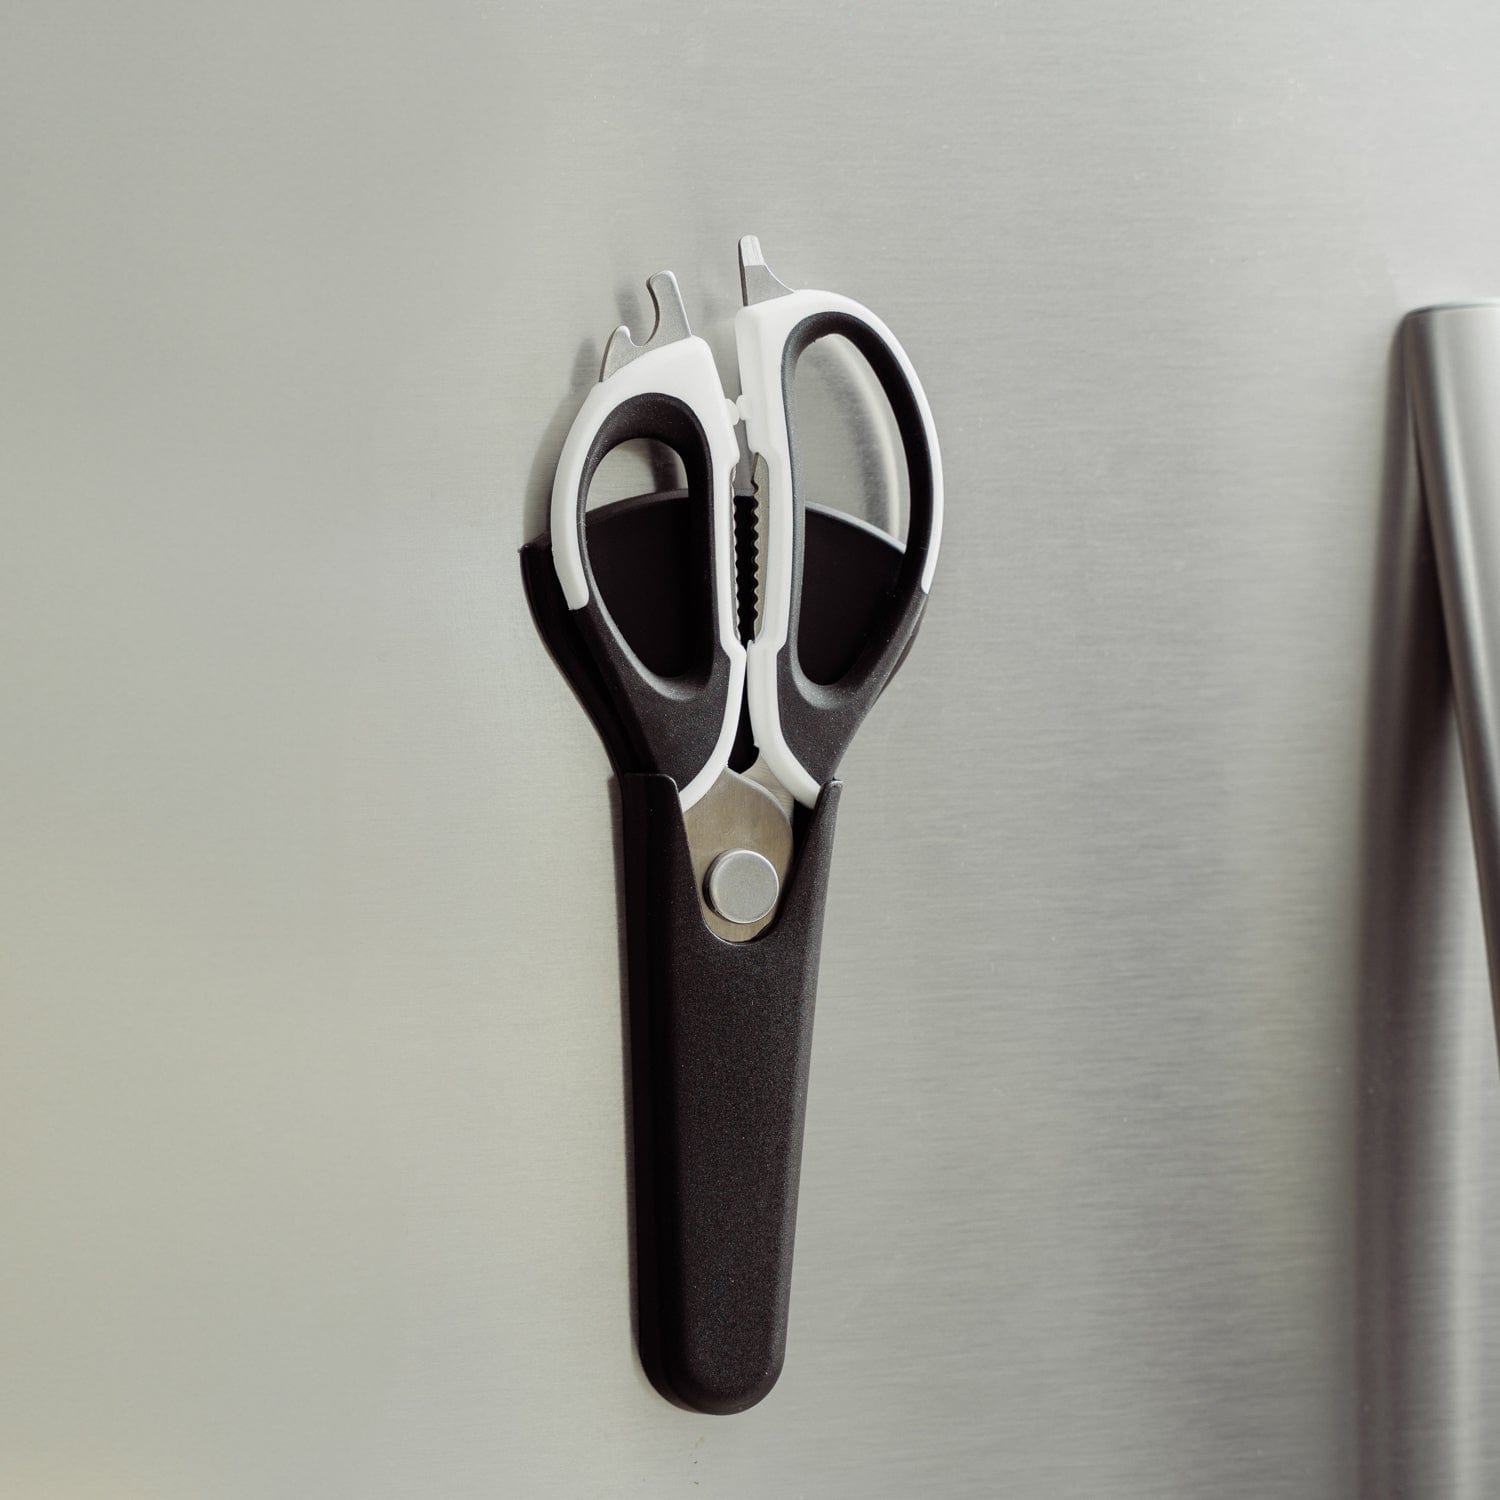 COOK EASY Homewares Multipurpose Kitchen Scissors, Super Scissors, Stainless Steel Blades